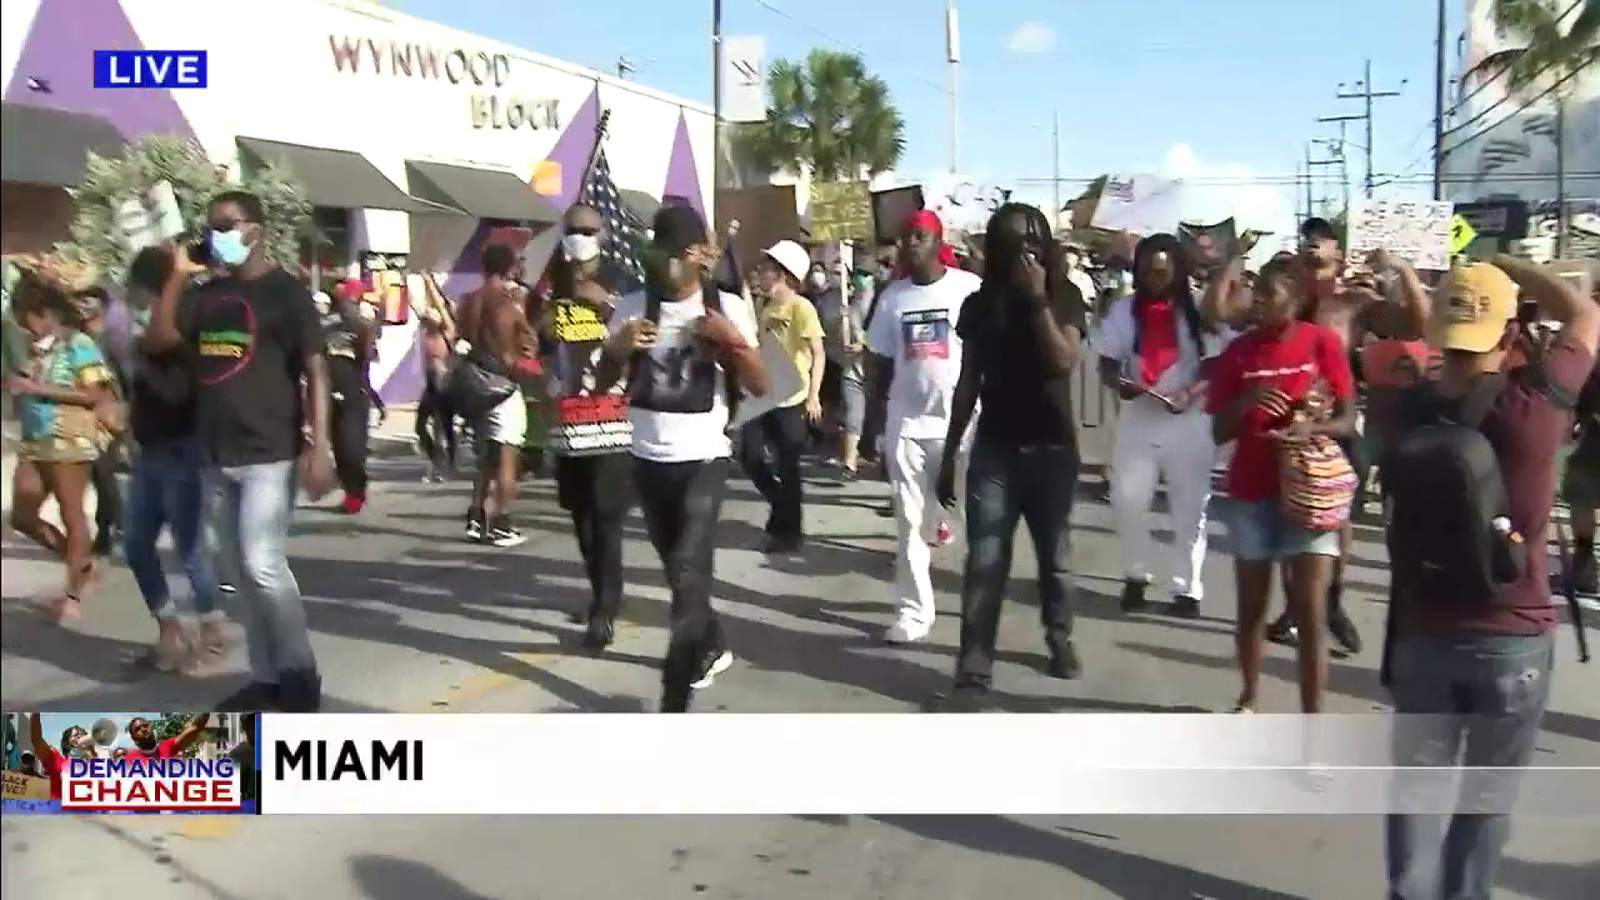 Demand for Change protests continue in Miami